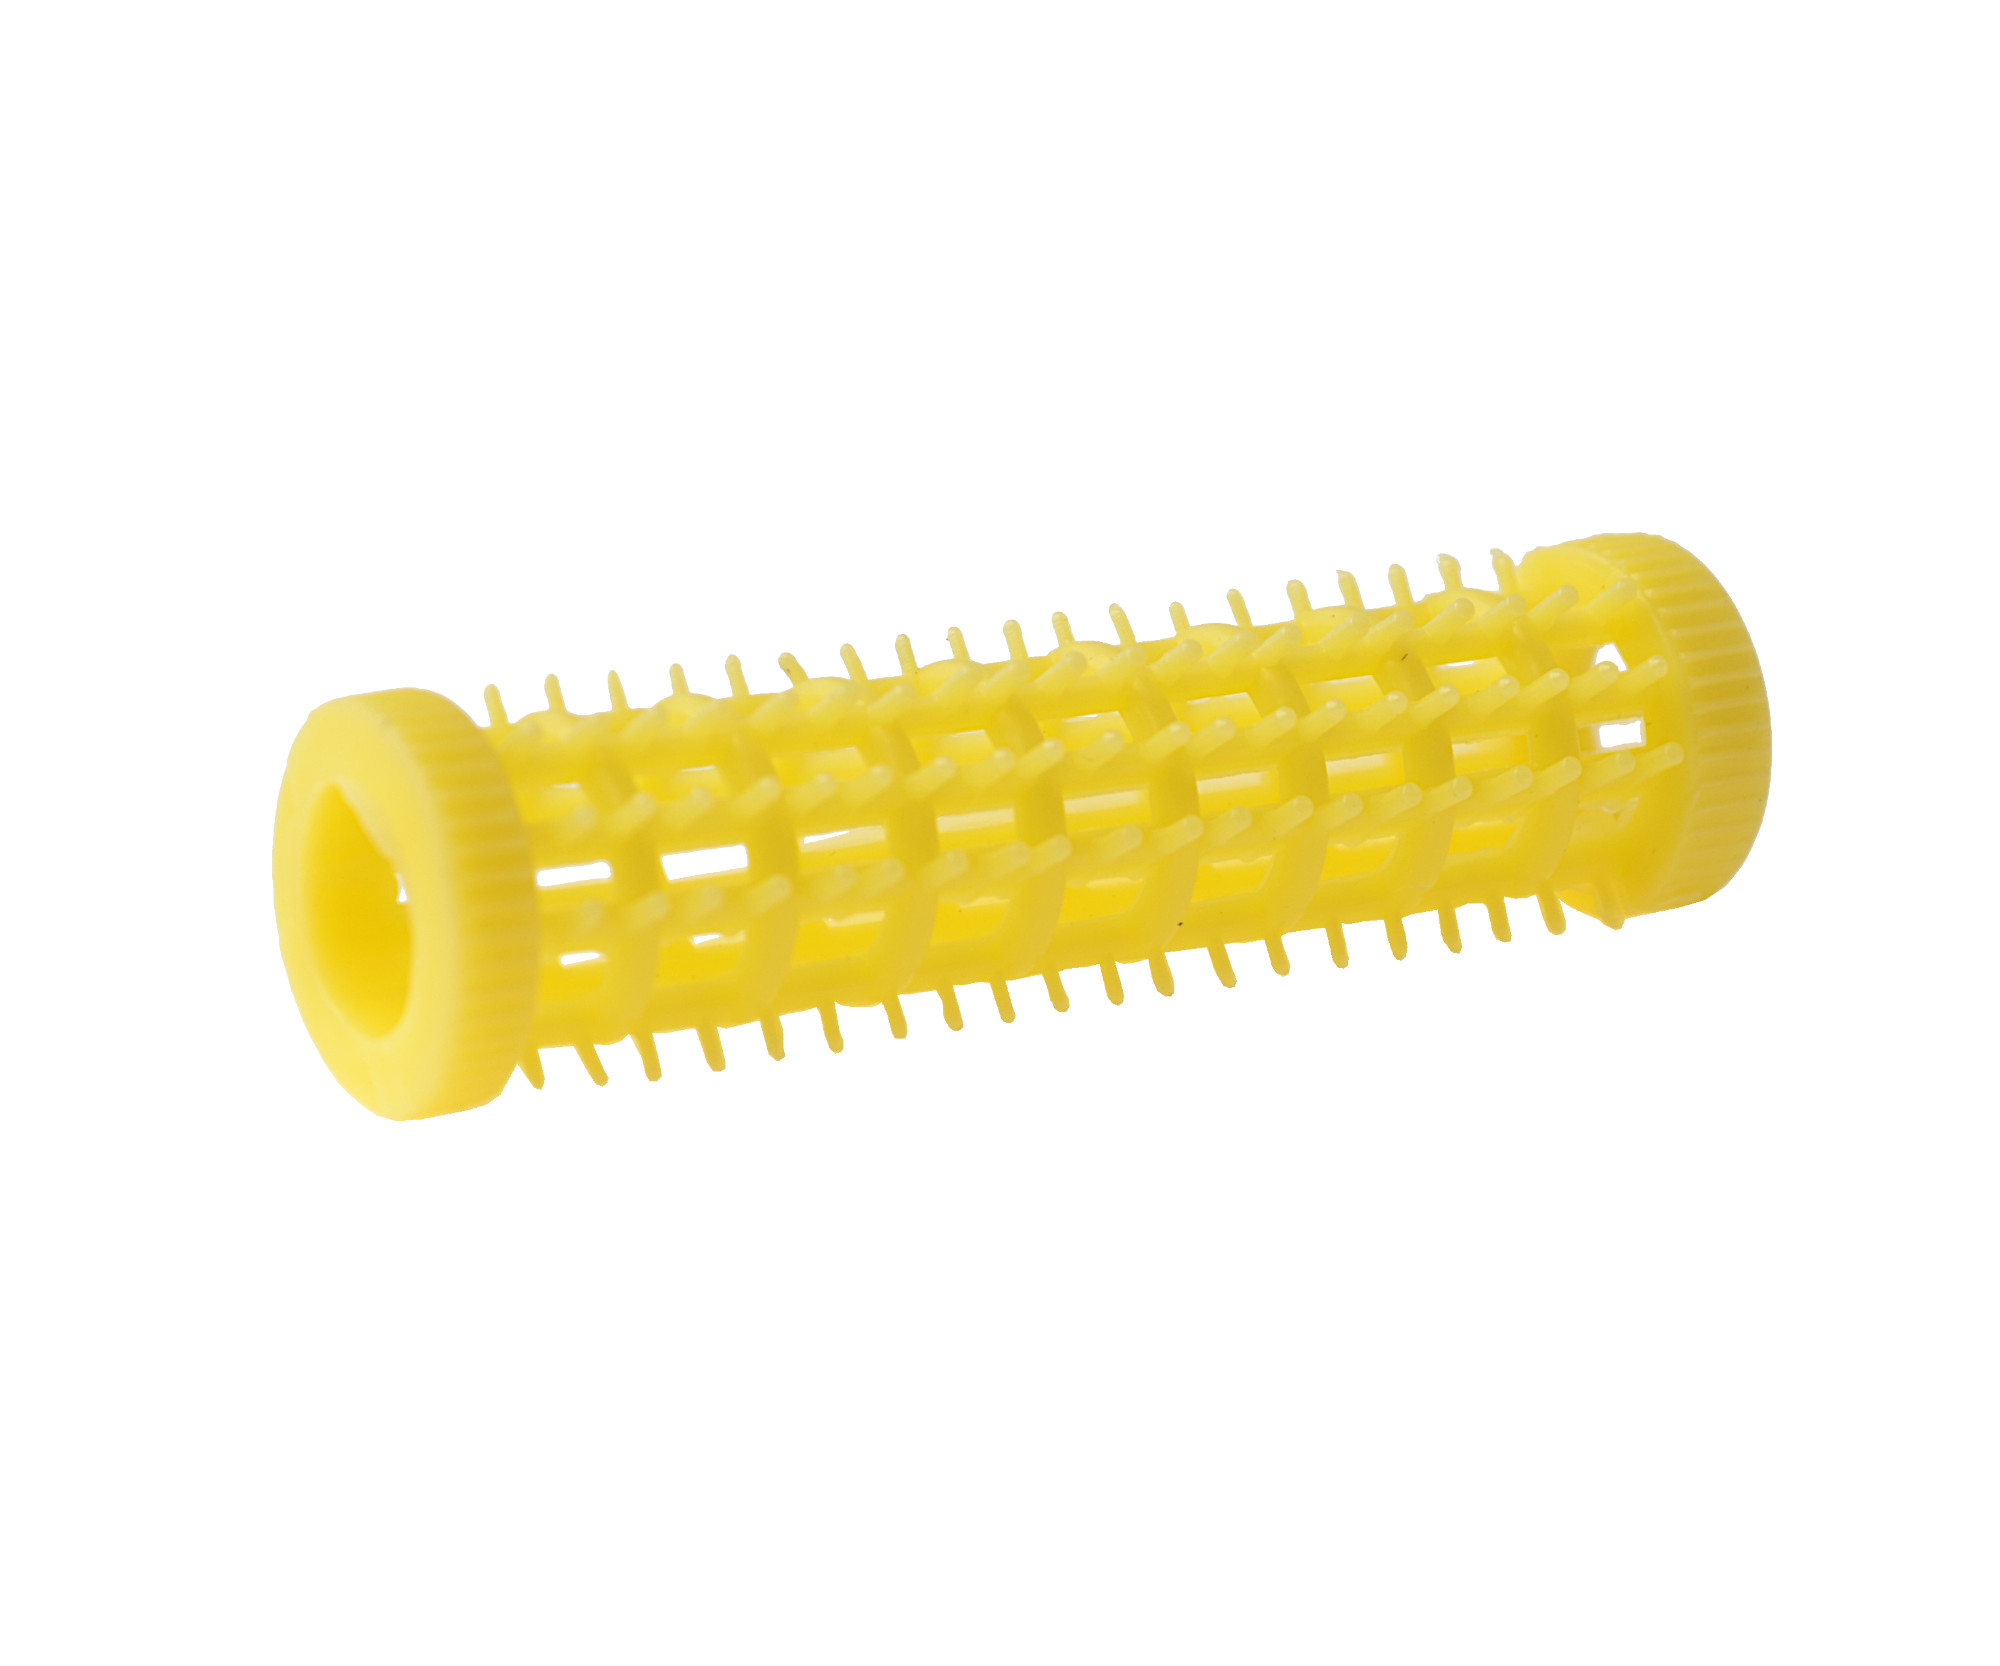 Plastové natáčky na vlasy s jehlami Bellazi - pr. 13 mm, 12 ks, žluté